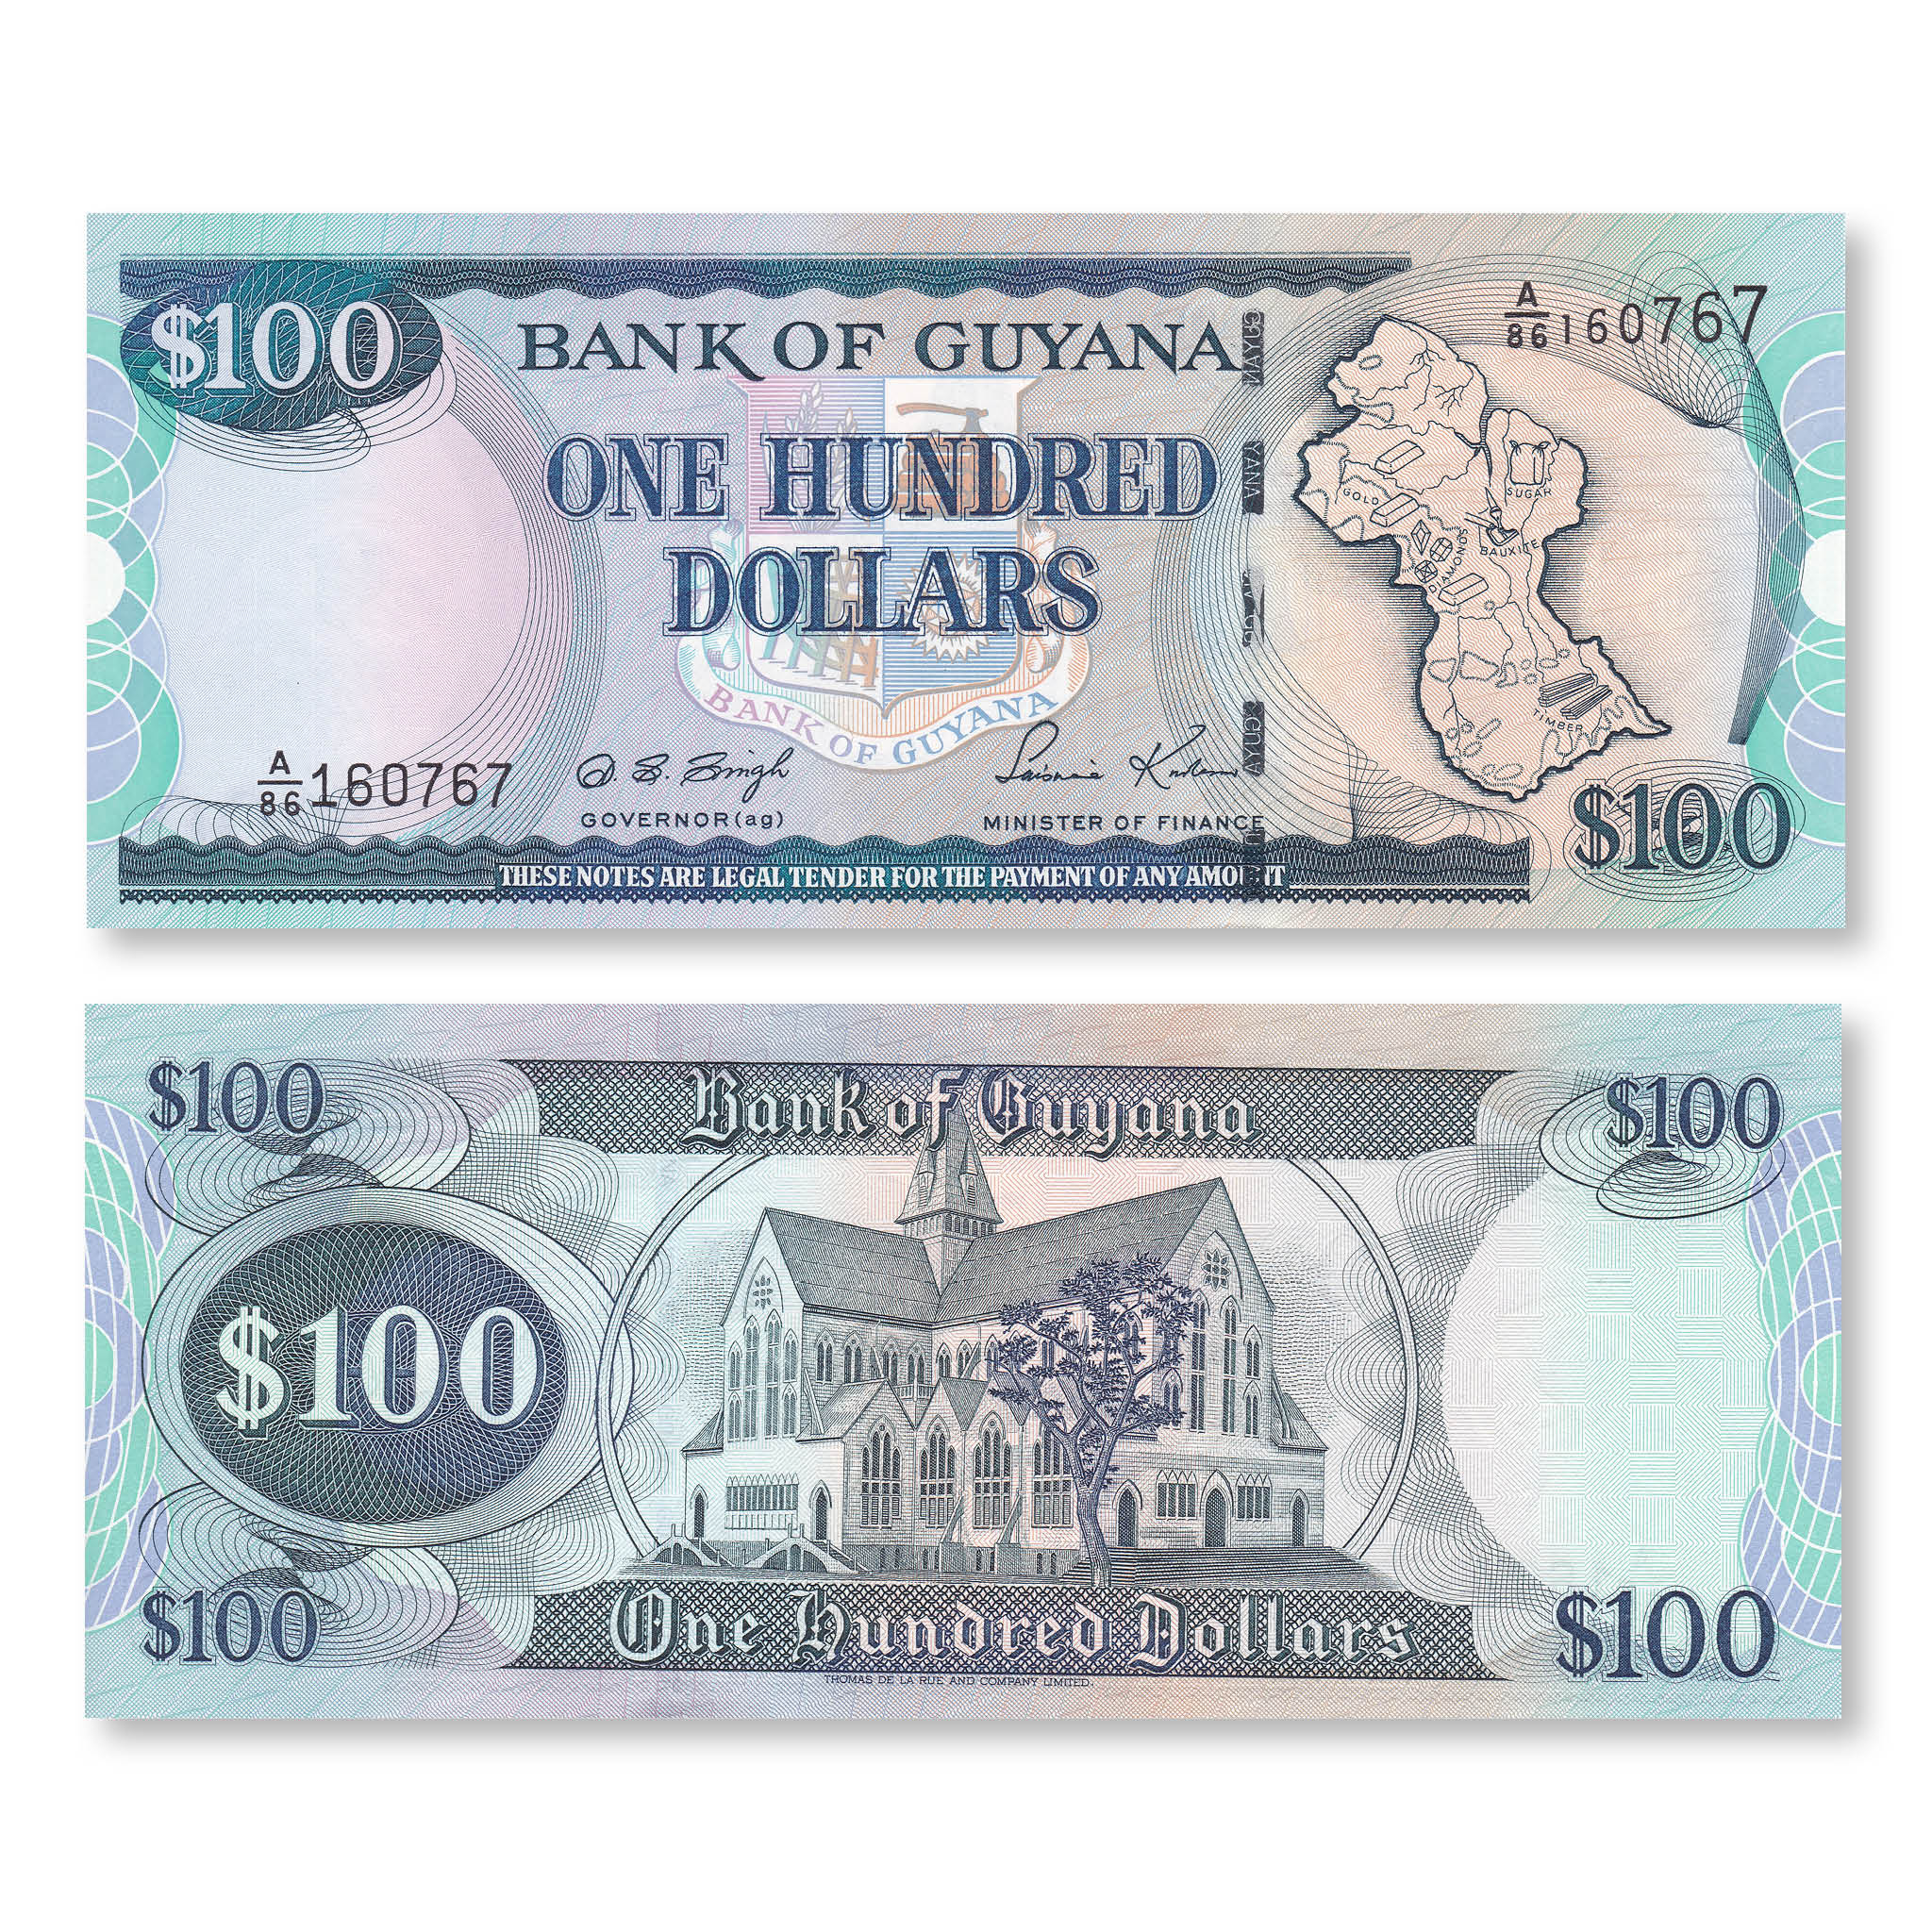 Guyana 100 Dollars, 1998, B109c, P31, UNC - Robert's World Money - World Banknotes